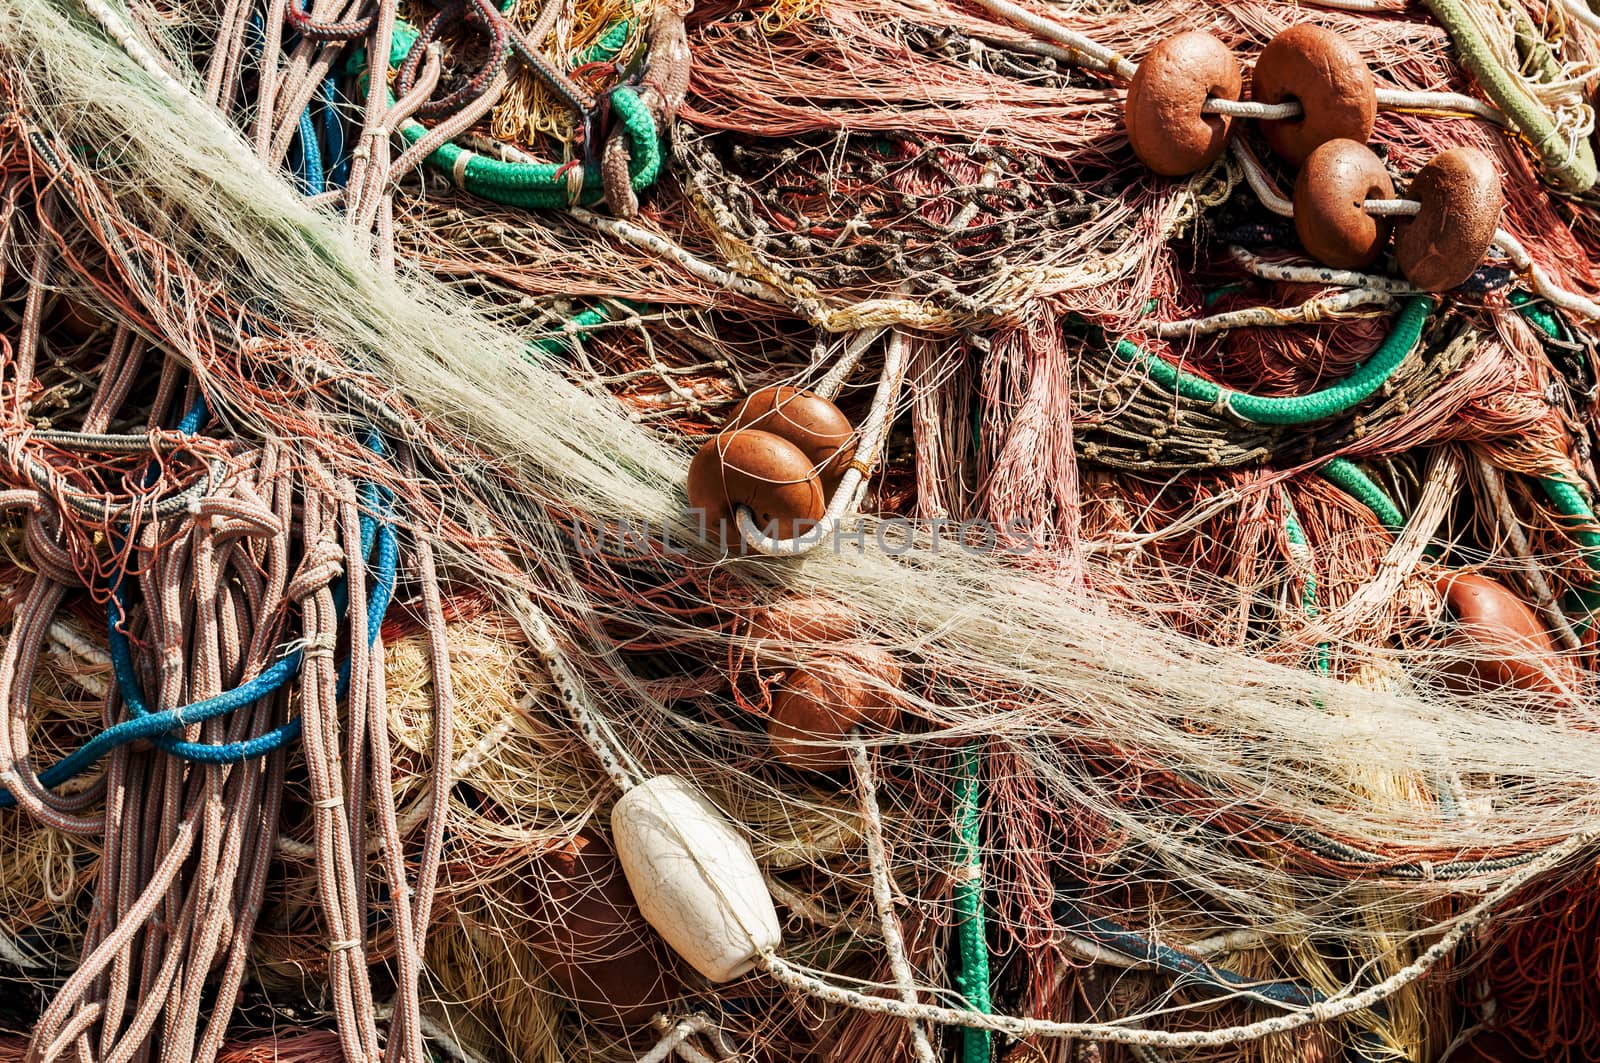 colored fishing net used by fishermen in Mediterranean sea